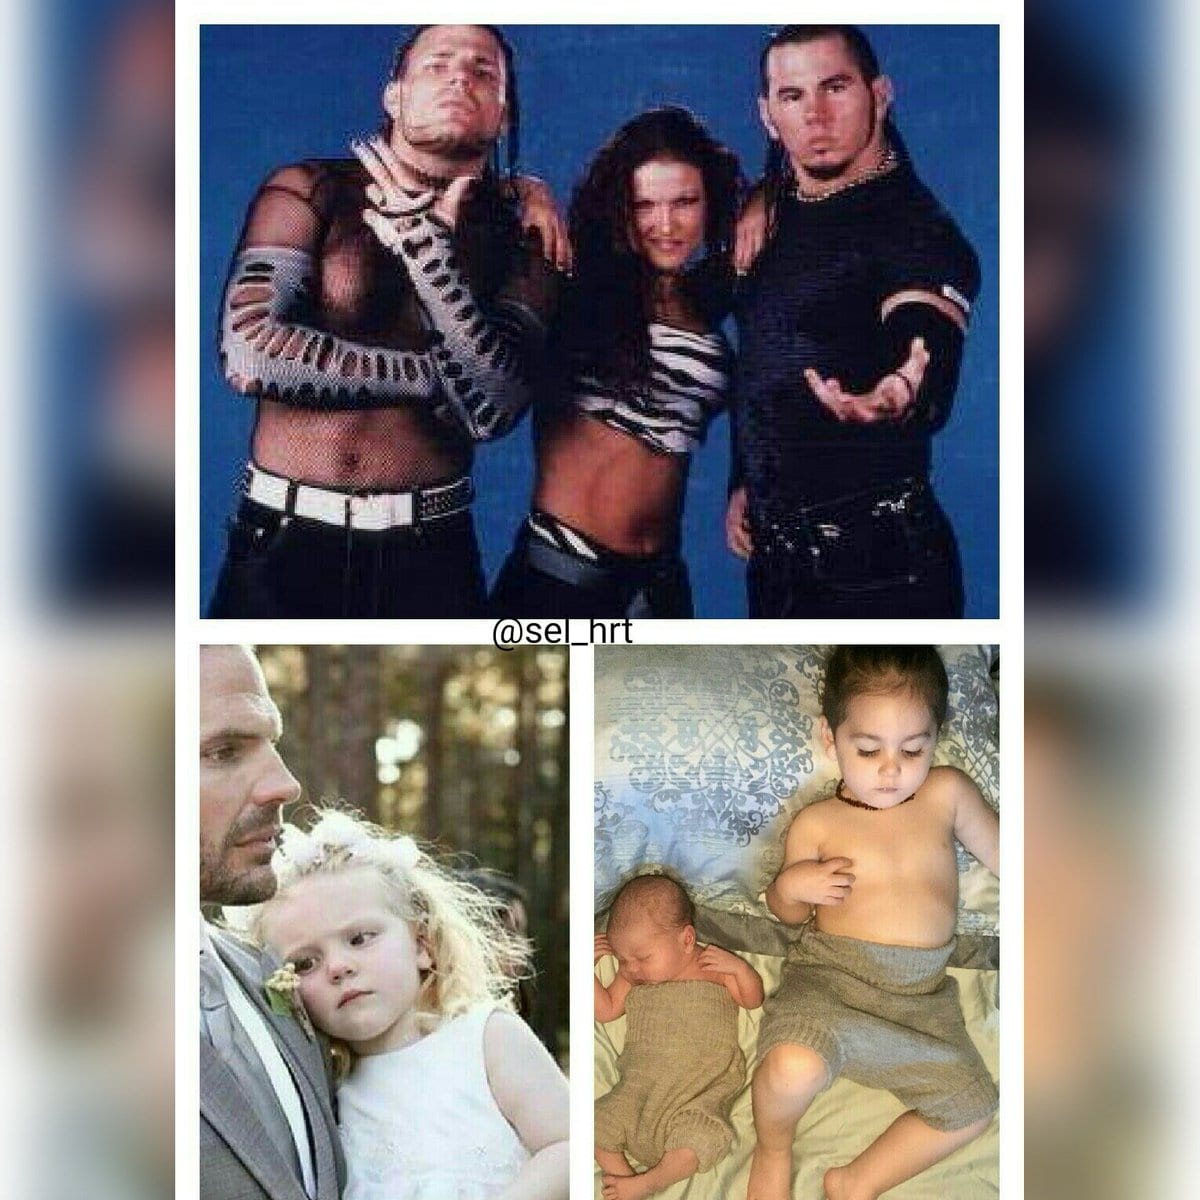 Team Extreme 2.0 with Matt & Jeff Hardy's children